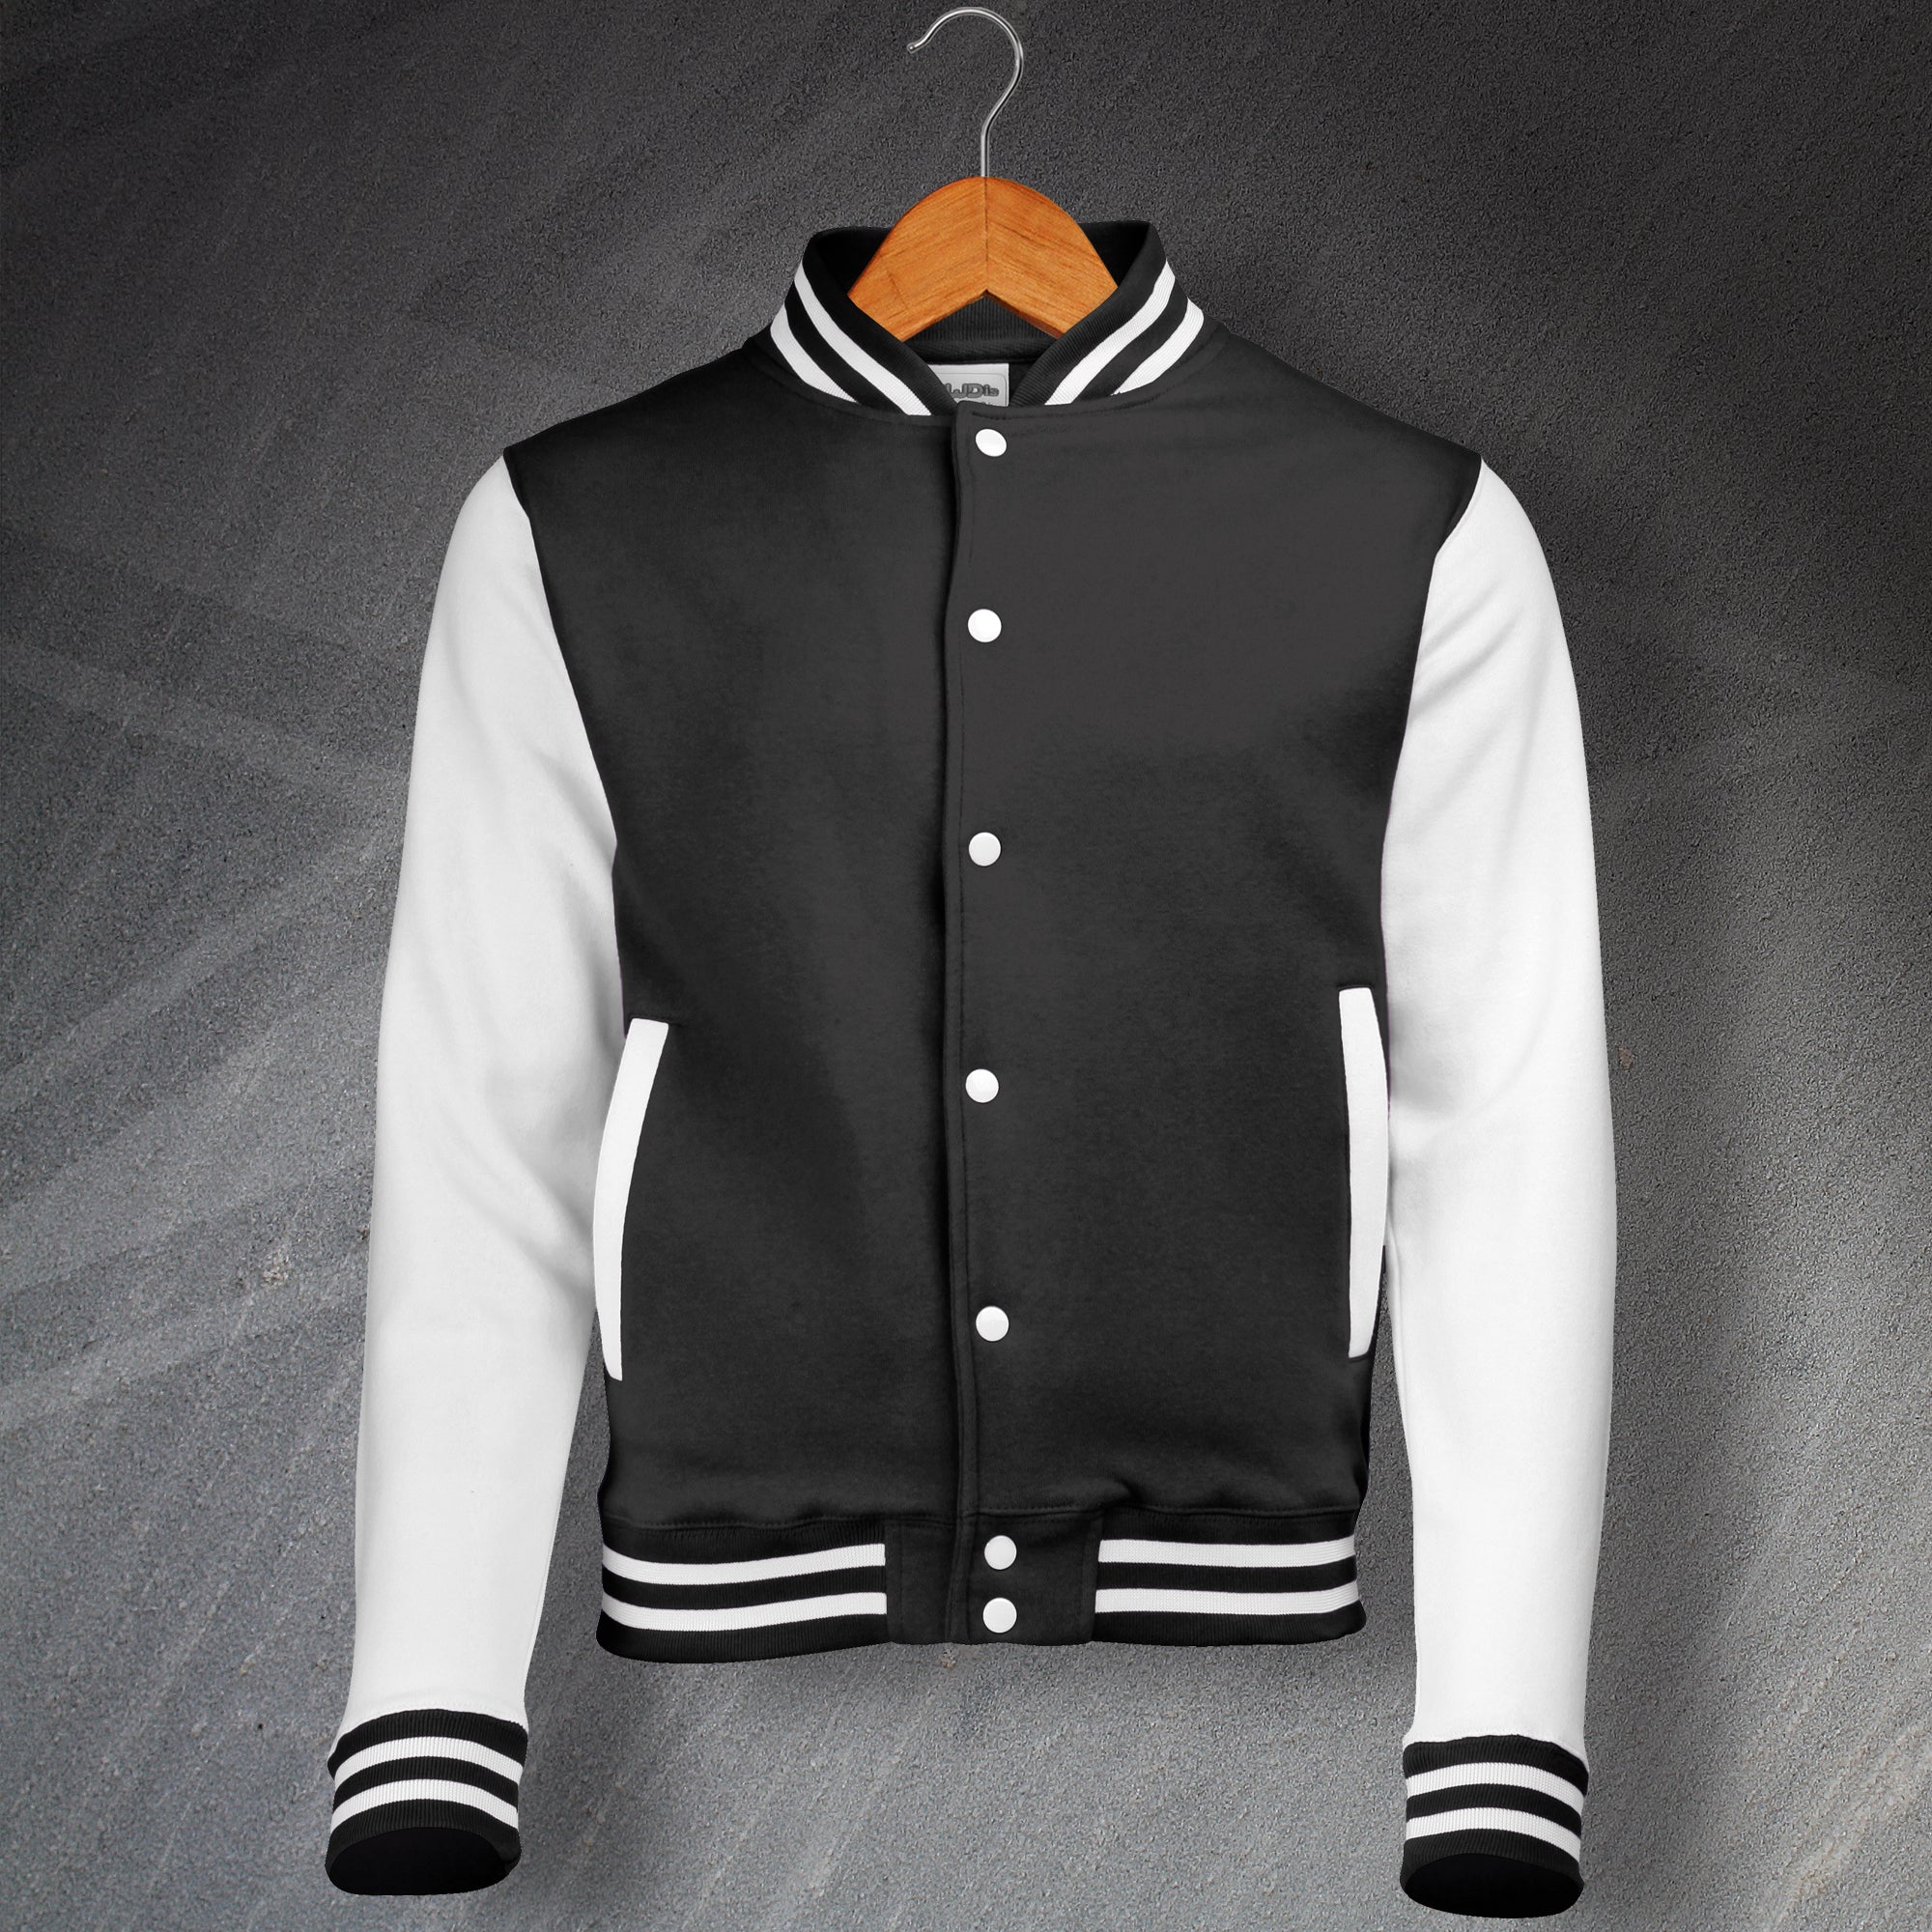 Black and White Varsity Jacket | Varsity Jackets Mens for Sale ...